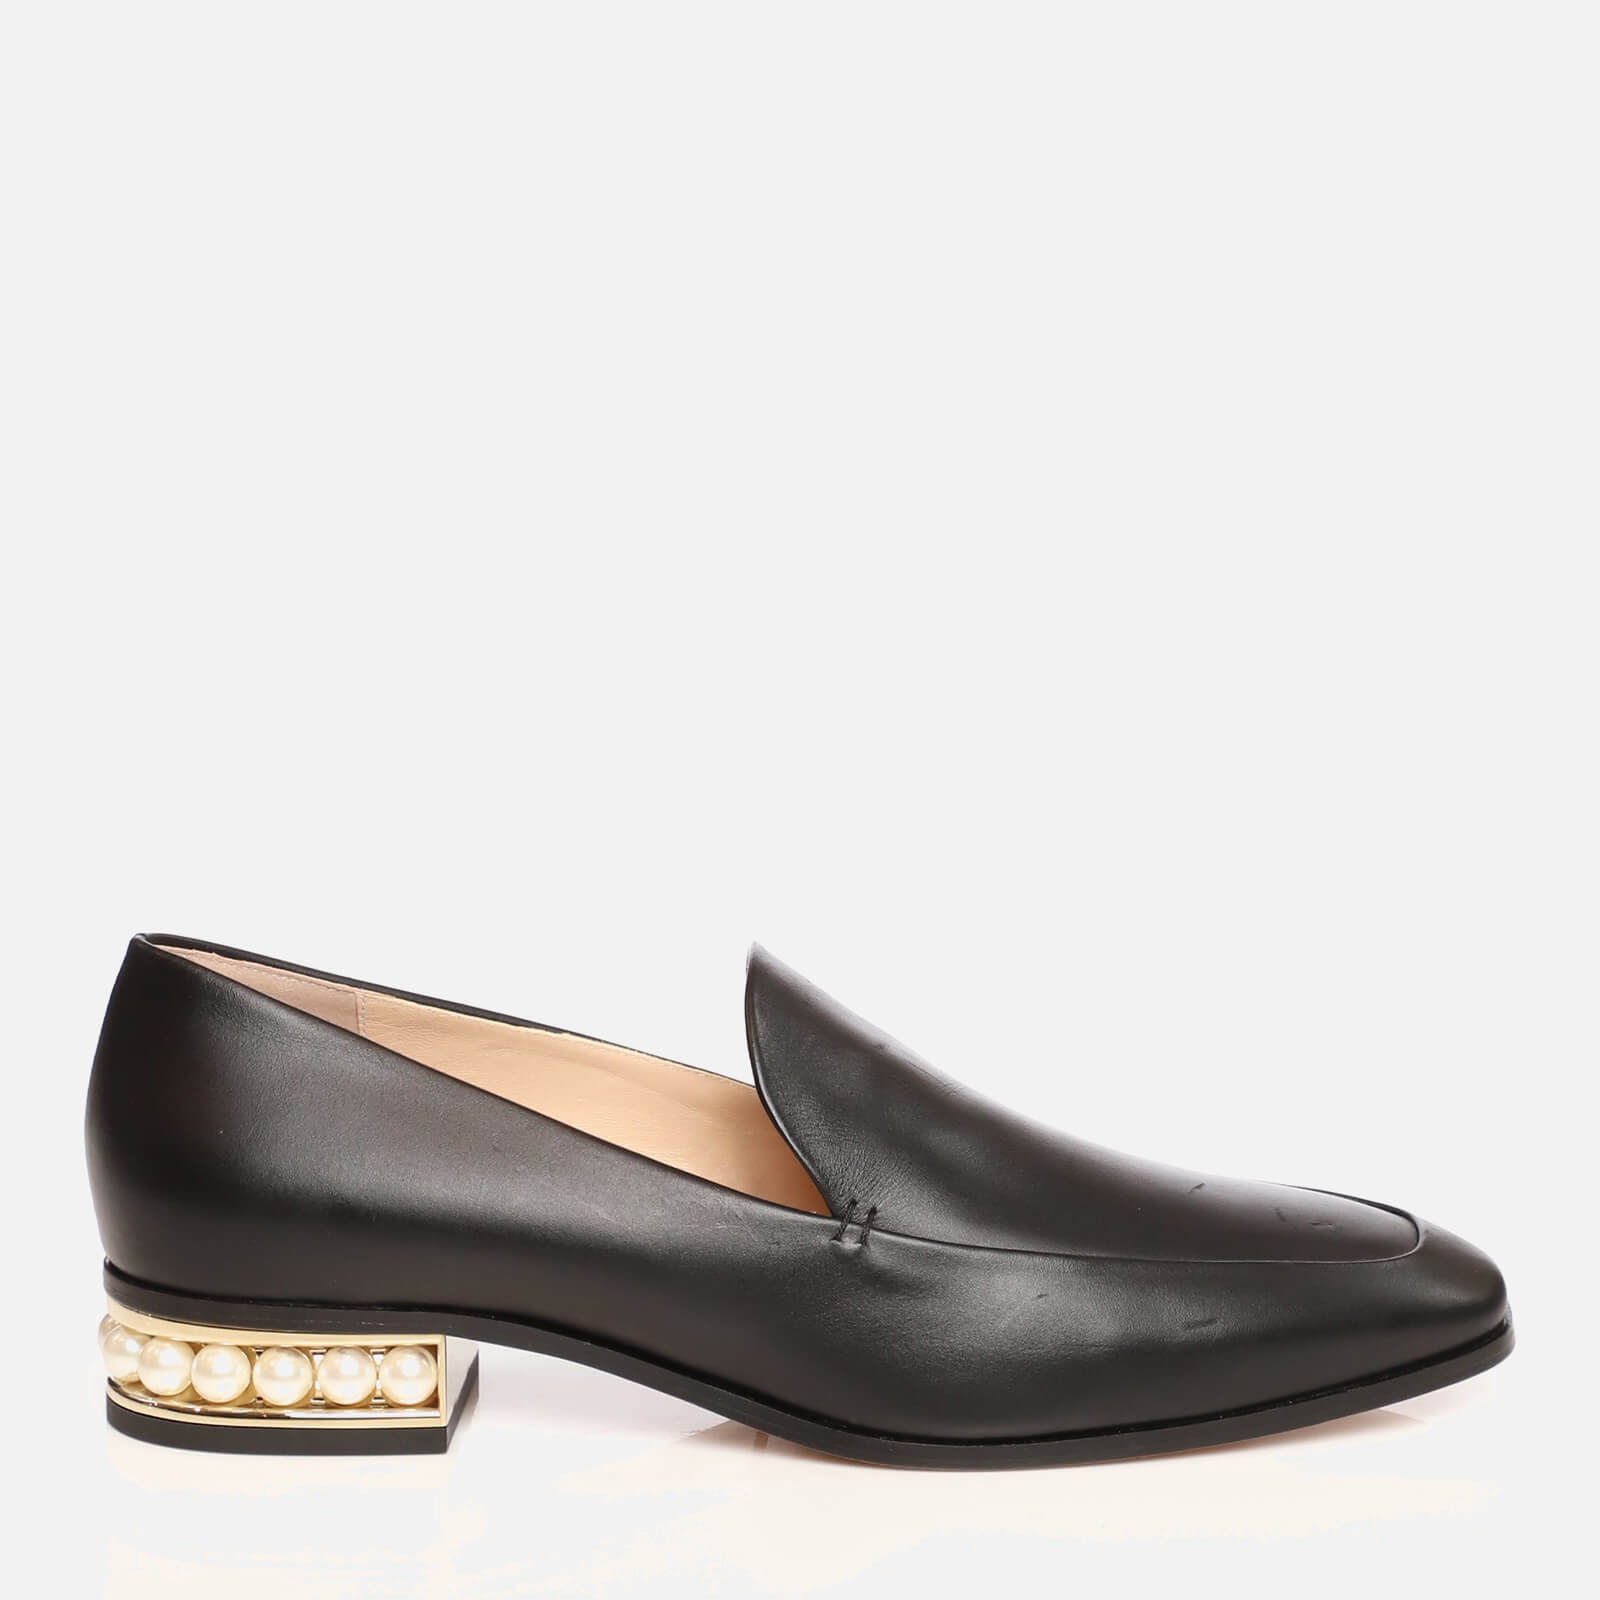 Nicholas Kirkwood Women's 25mm Casati Leather Loafers - Black - UK 4